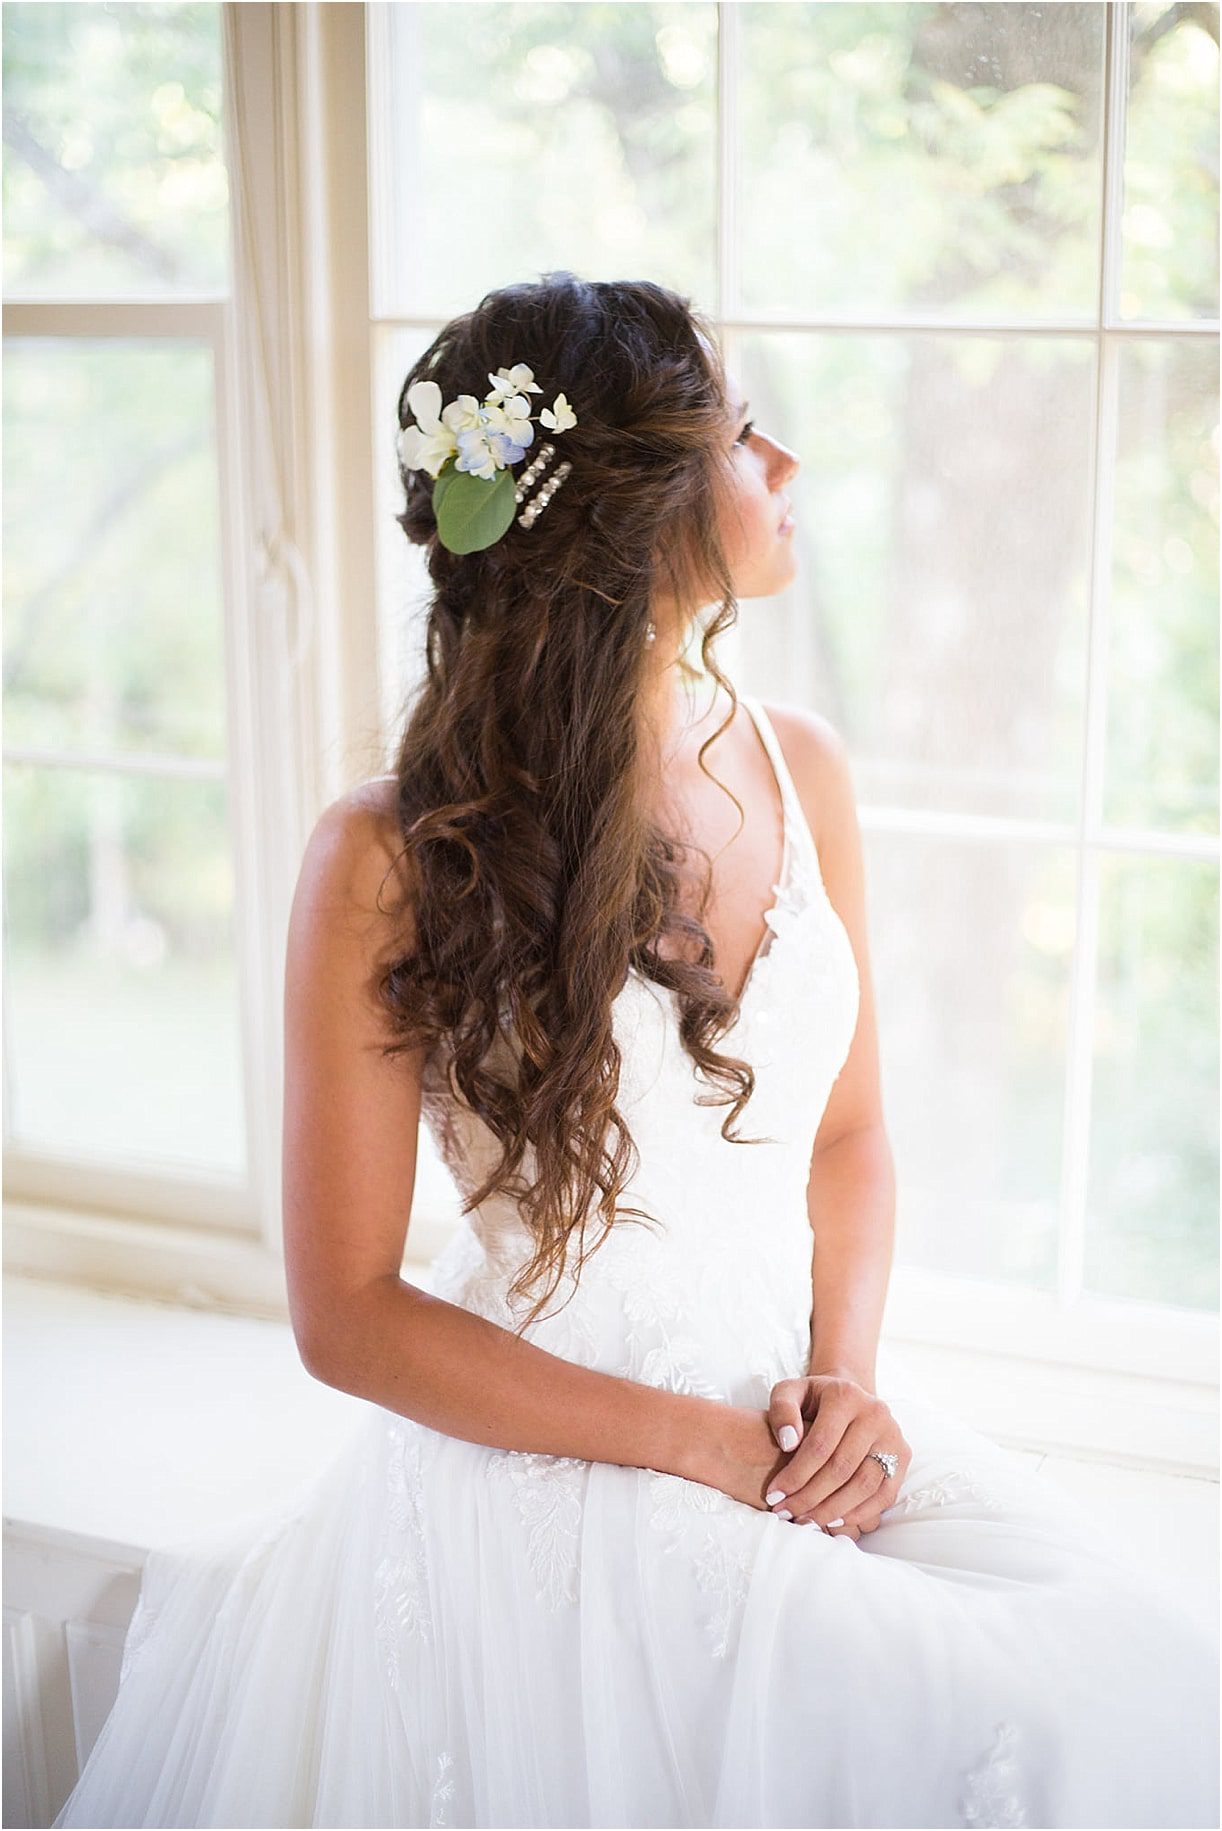 How to Make DIY Hair Clips for Your Wedding | Hill City Bride Virginia Weddings Blog Long Wedding Hair